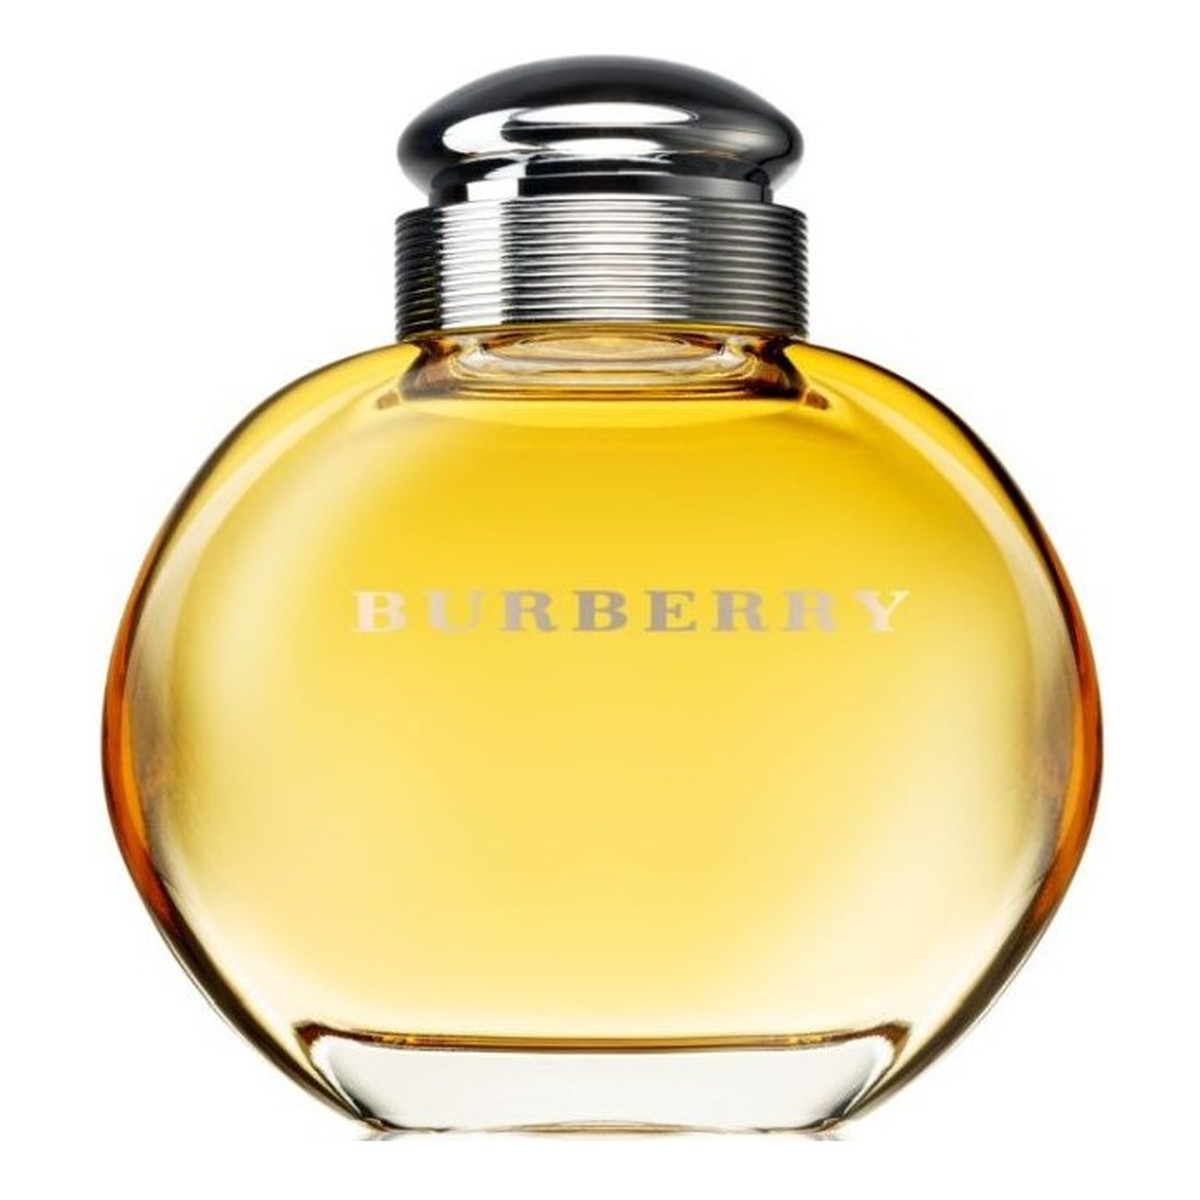 Burberry Women woda perfumowana 30ml